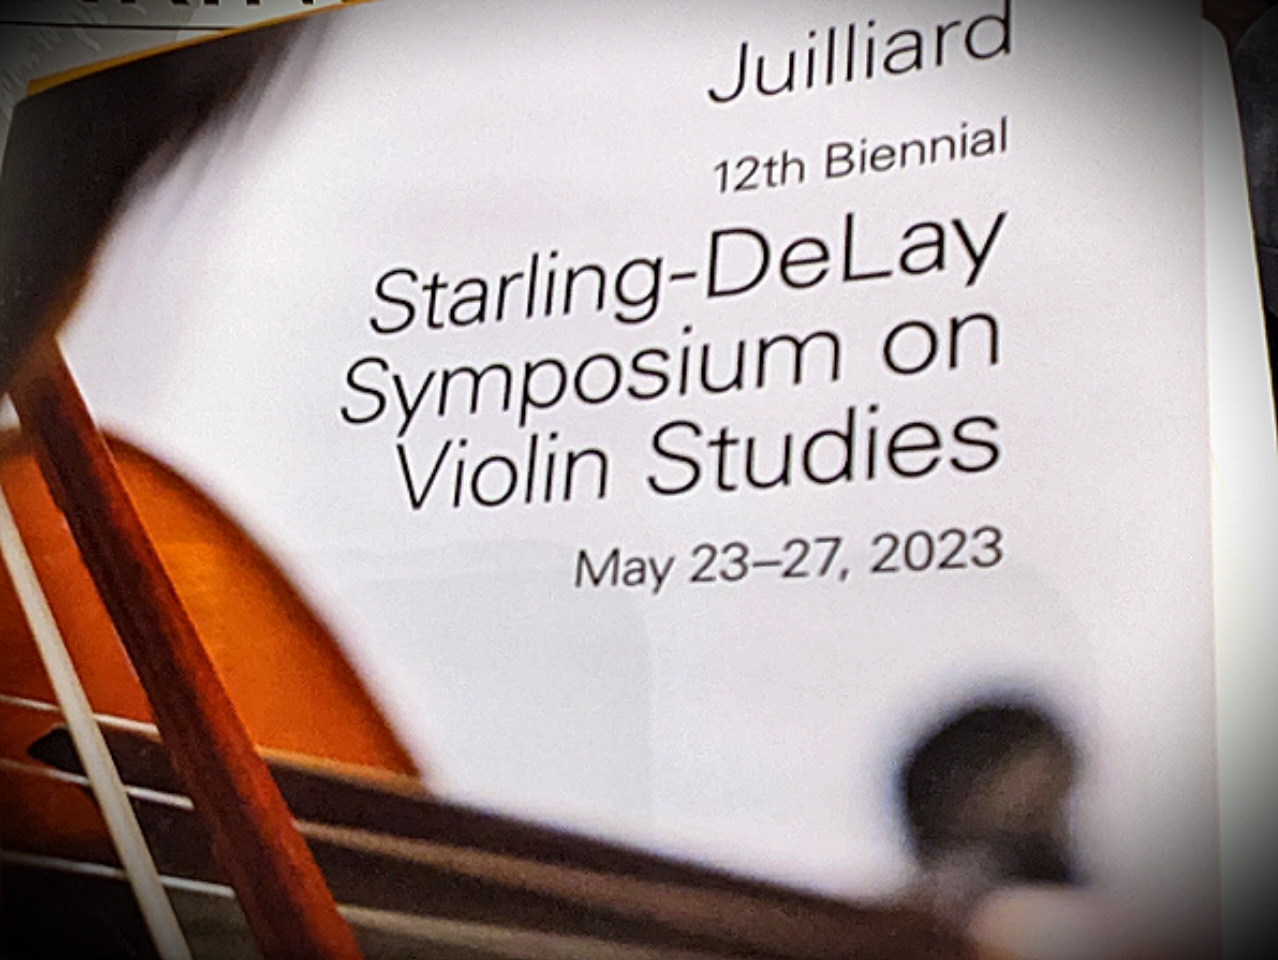 starling-delay symposium on violin studies 2023